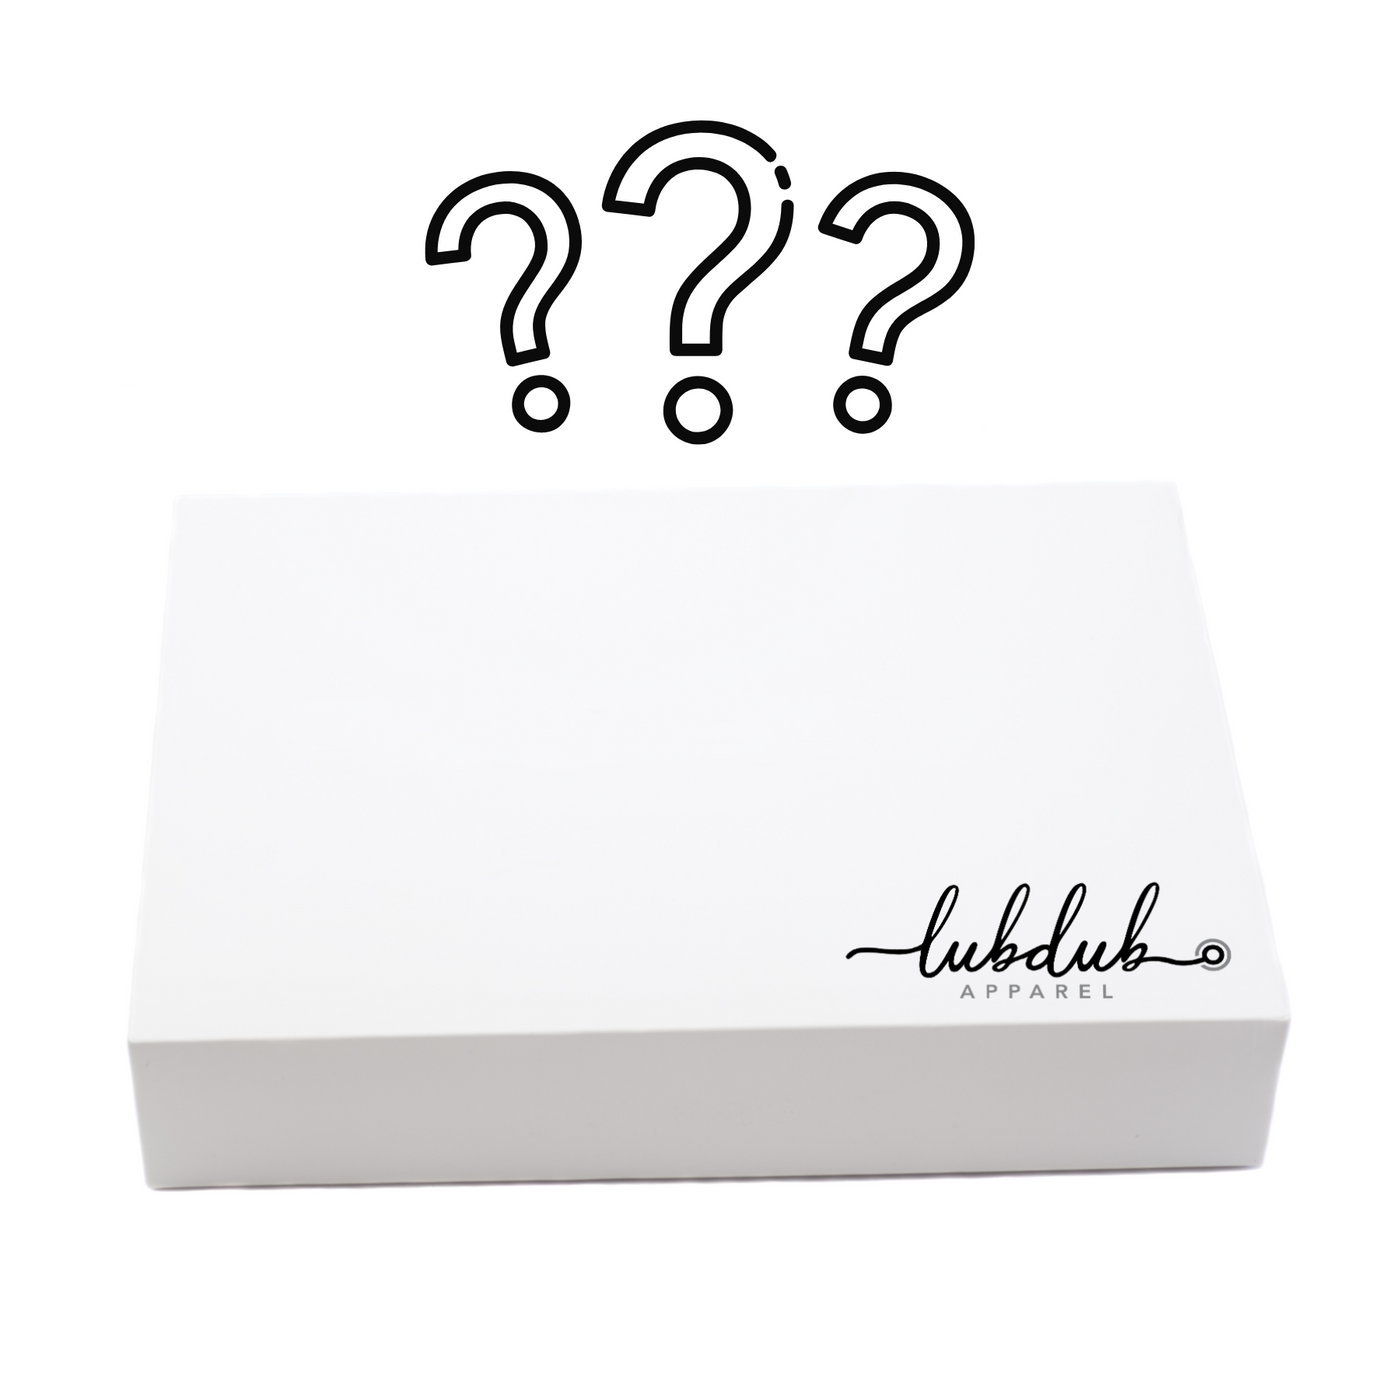 Deluxe Mystery Box - Lubdub Apparel